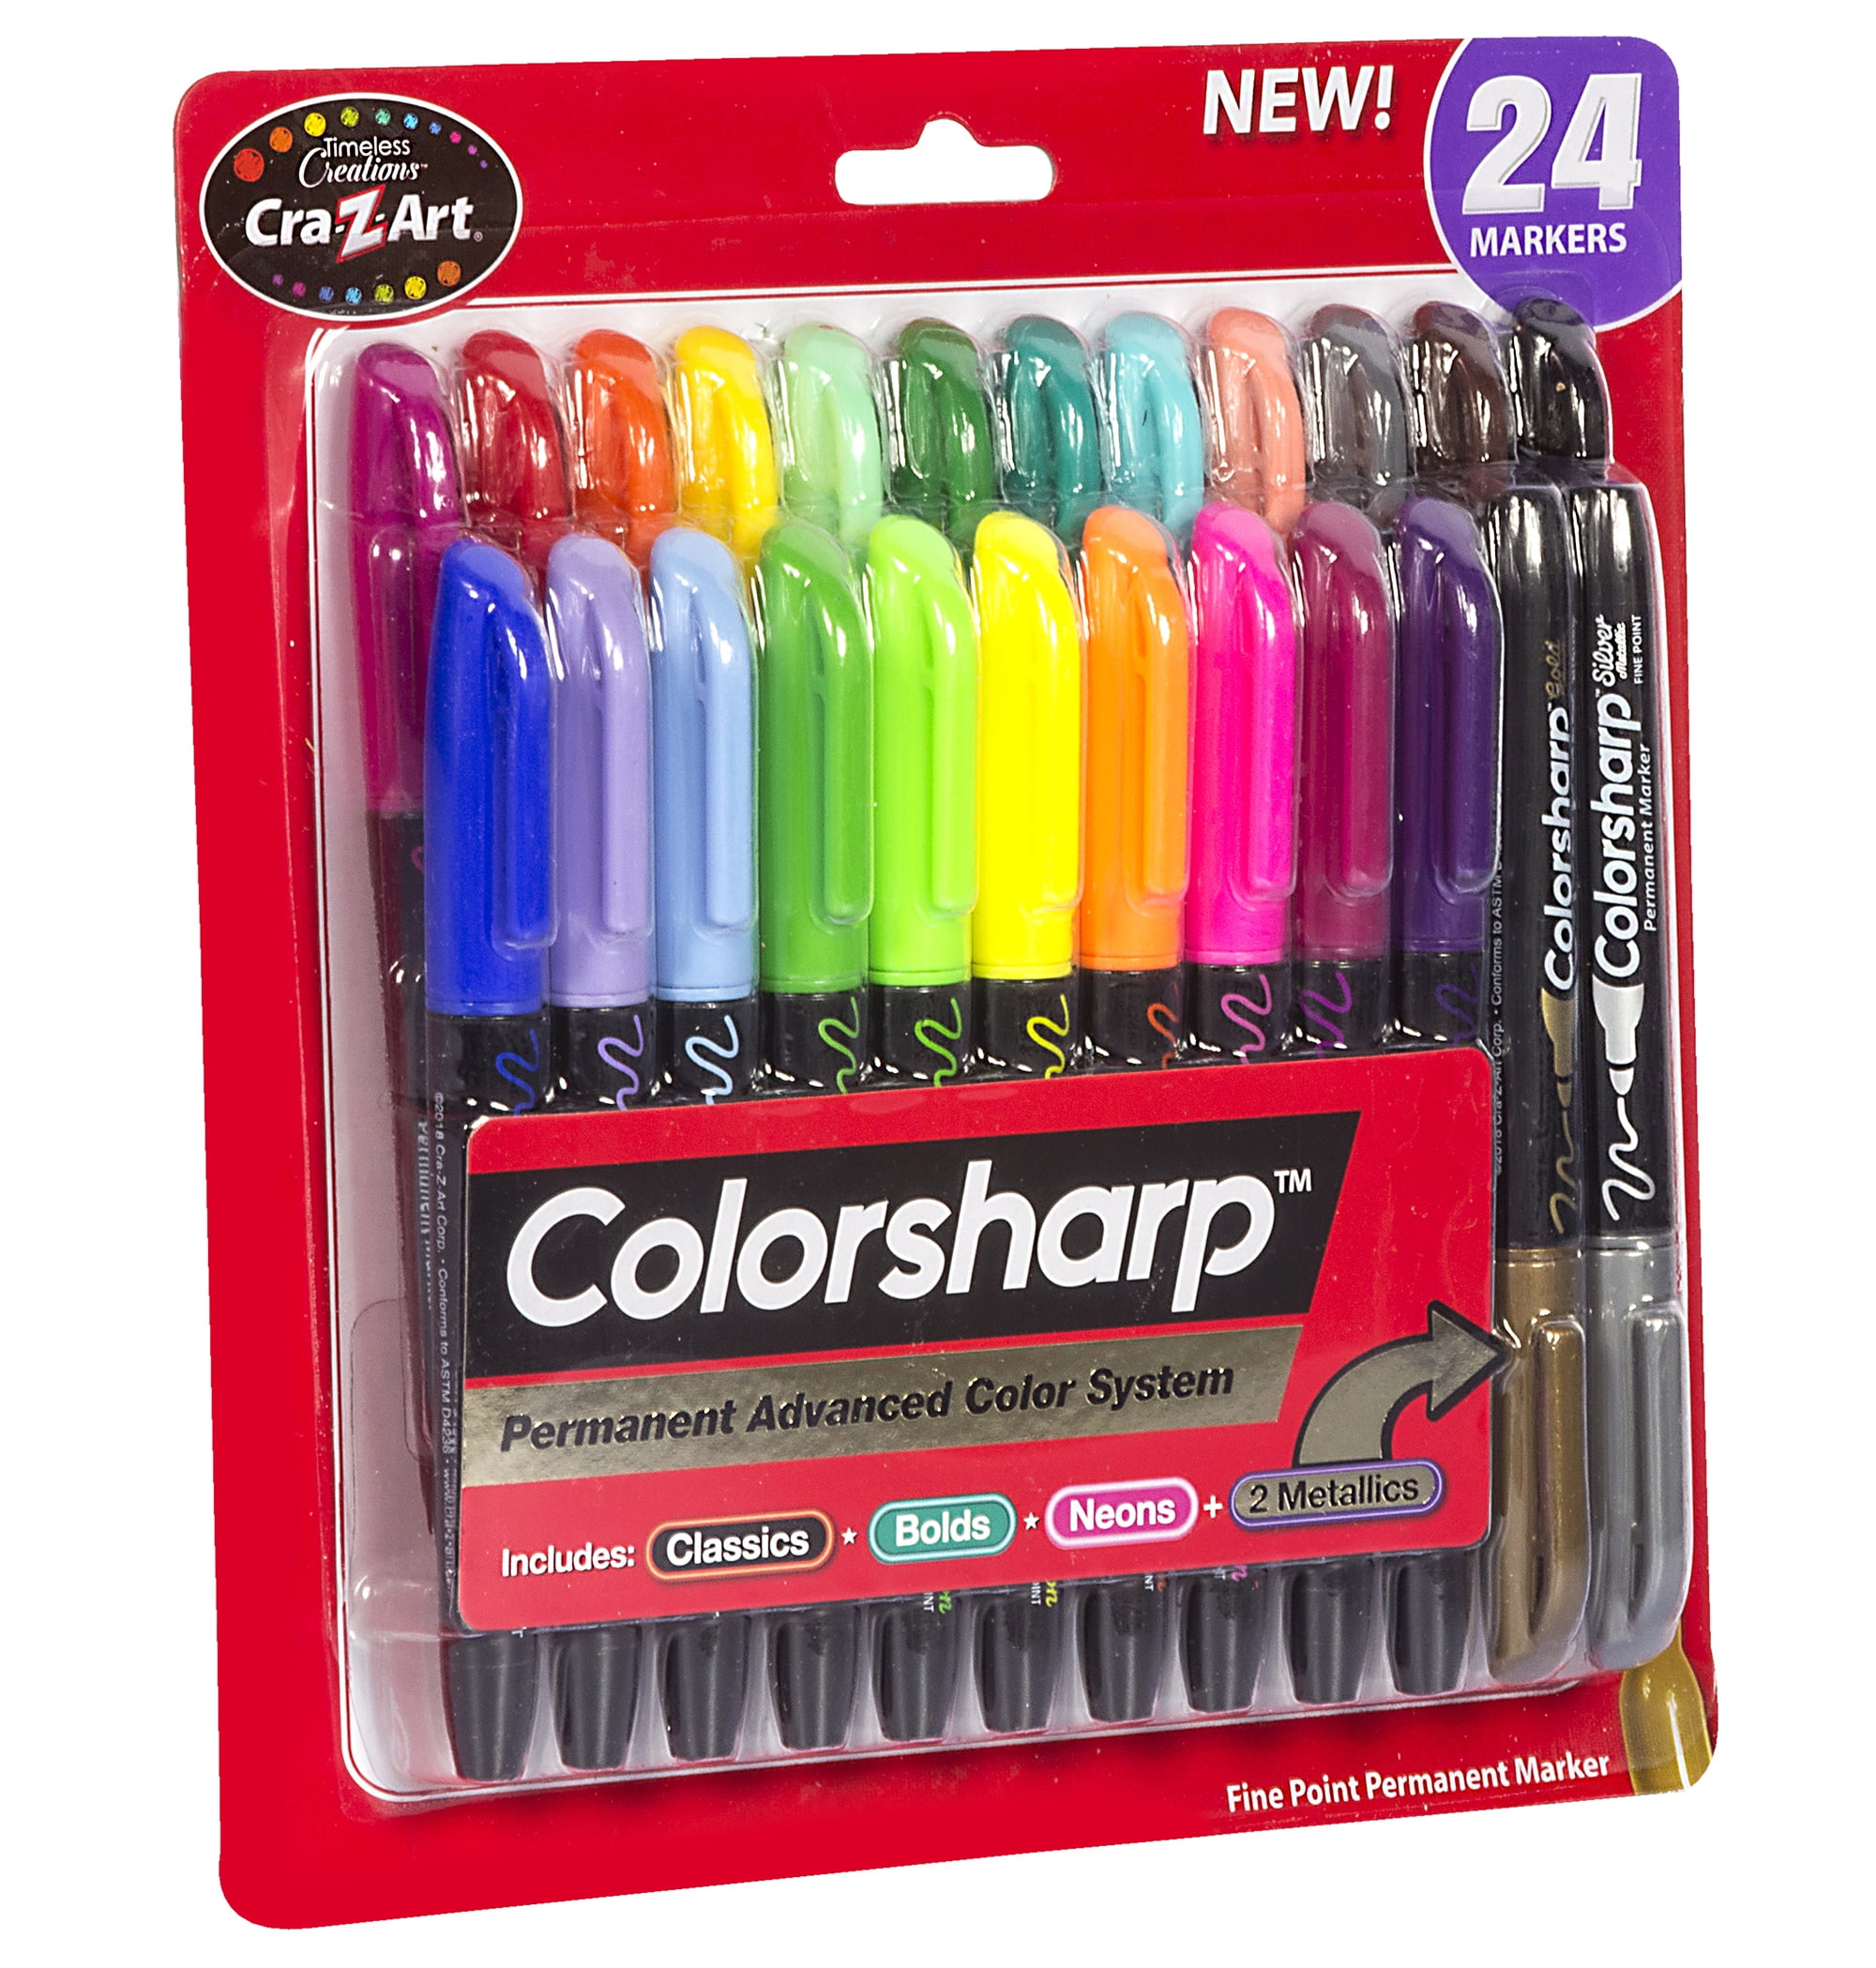 Cra-Z-Art Colorsharp Premium Permanent Markers